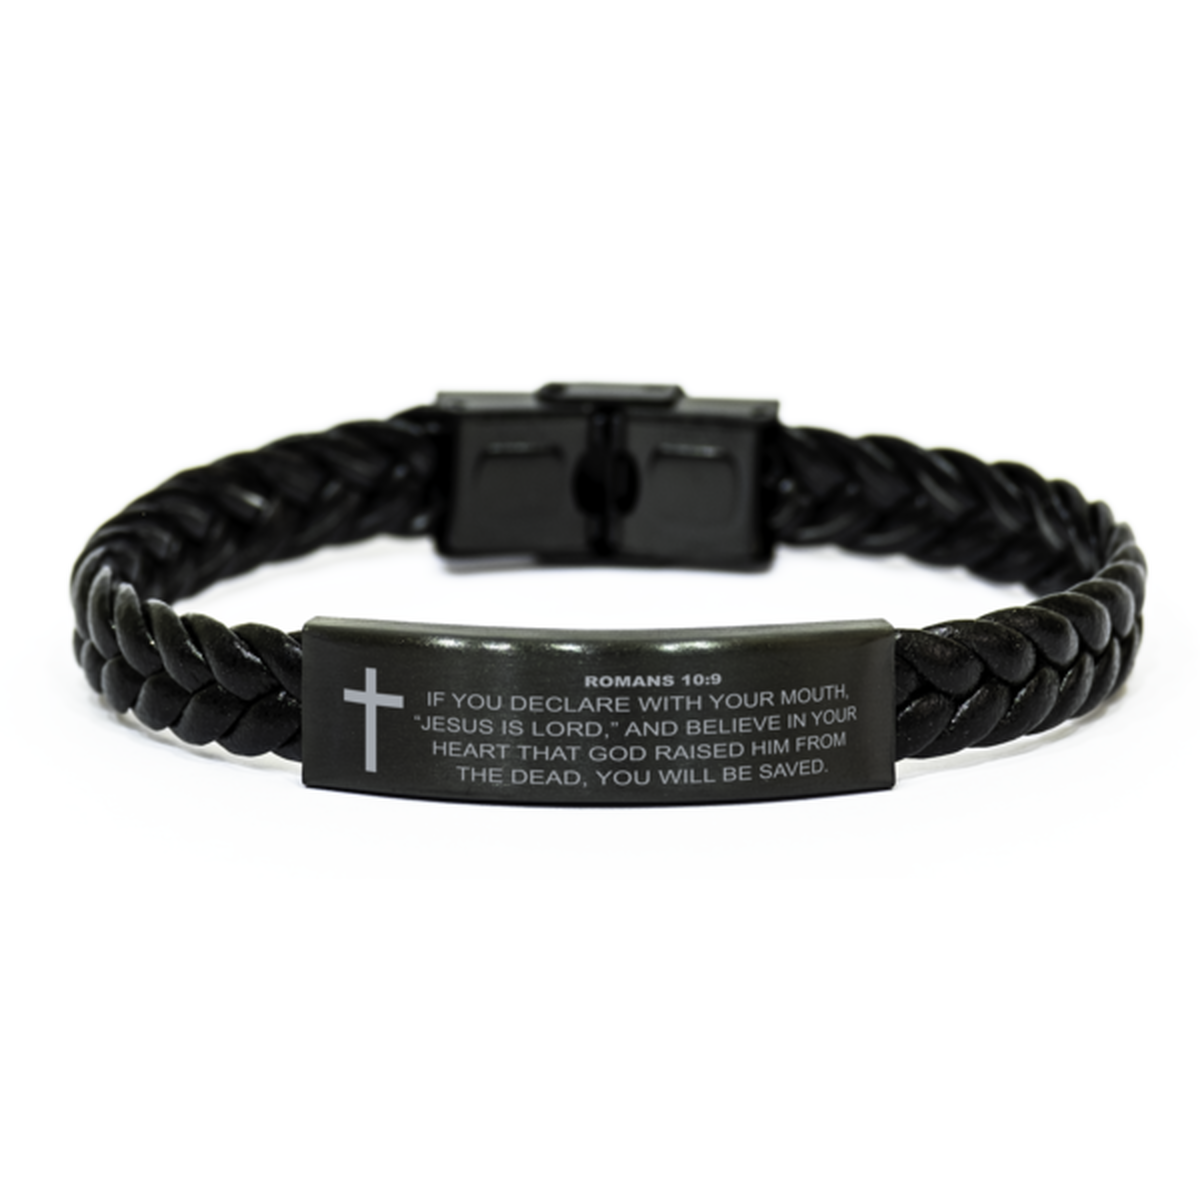 Romans 10:9 Bracelet, Jesus Is Lord You Will Be Saved, Bible Verse Bracelet, Christian Bracelet, Braided Leather Bracelet, Easter Gift